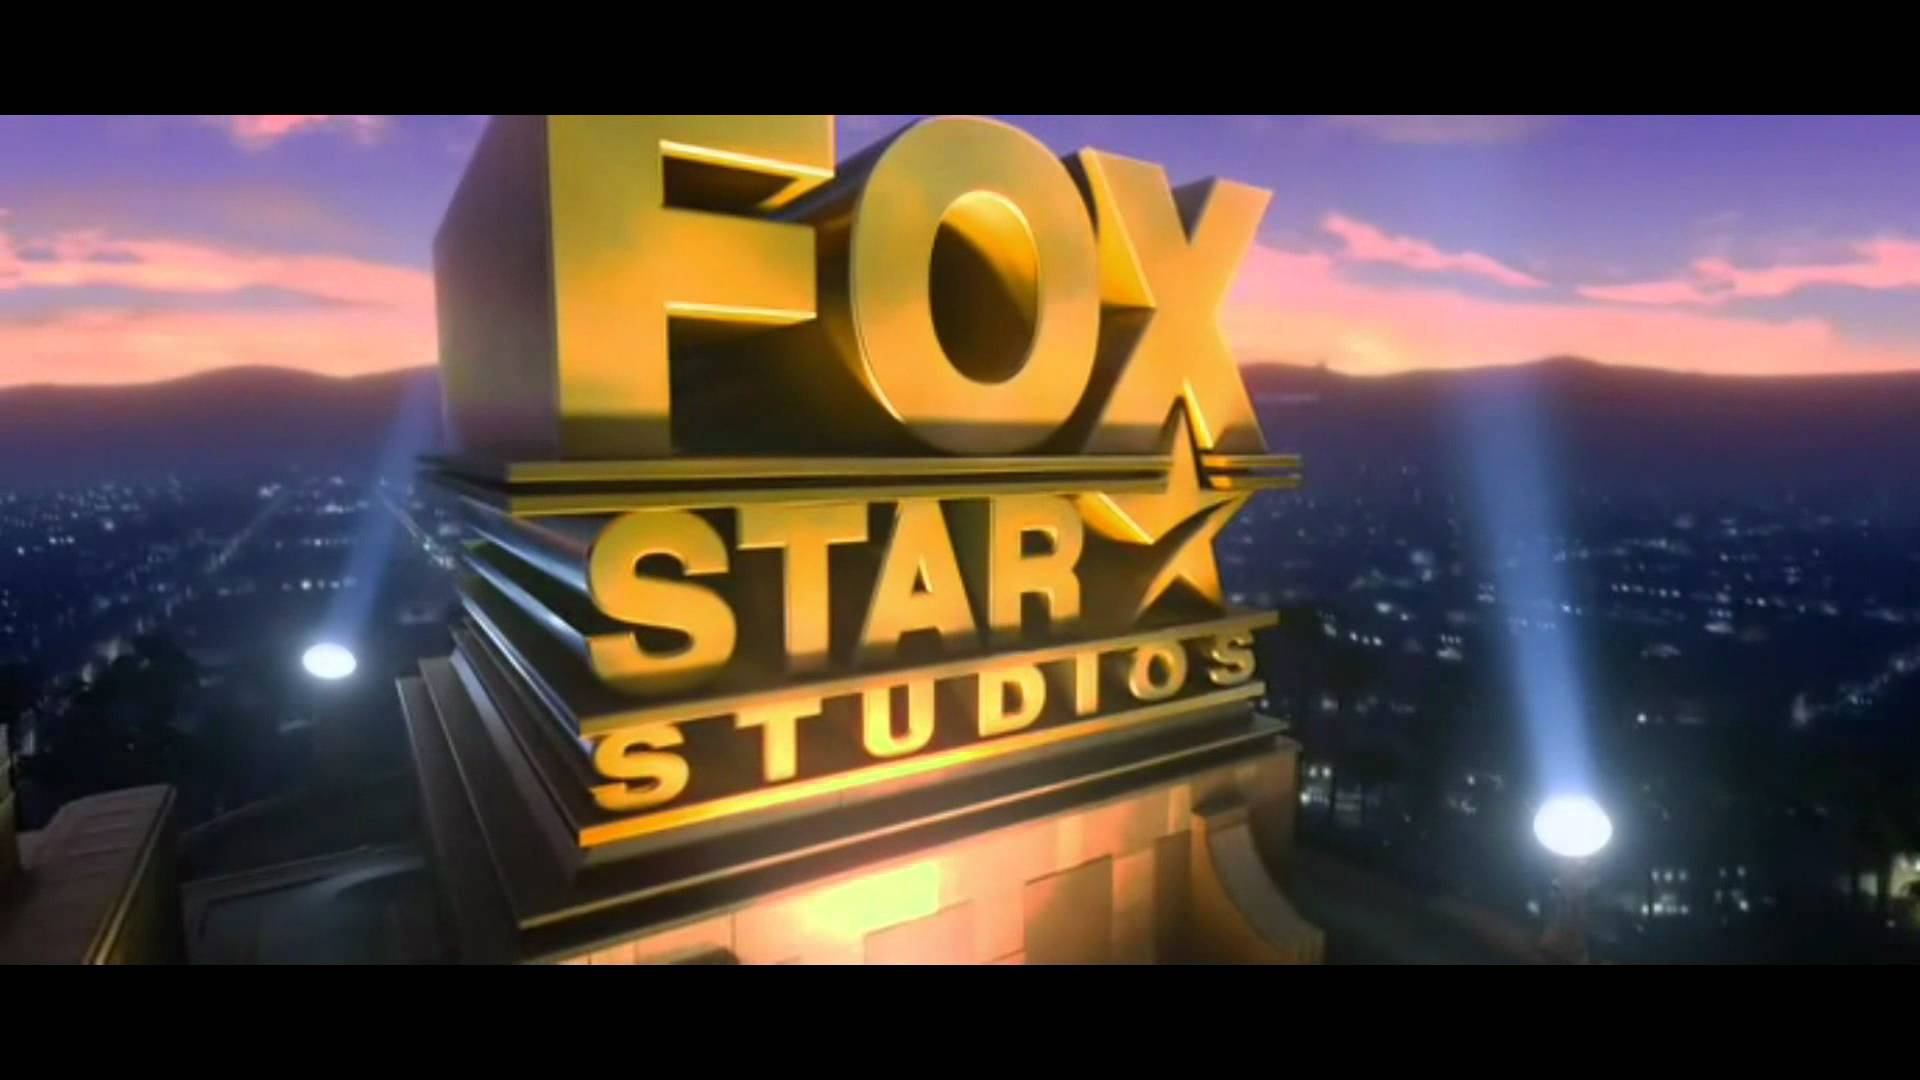 Fox Star Studios Logos